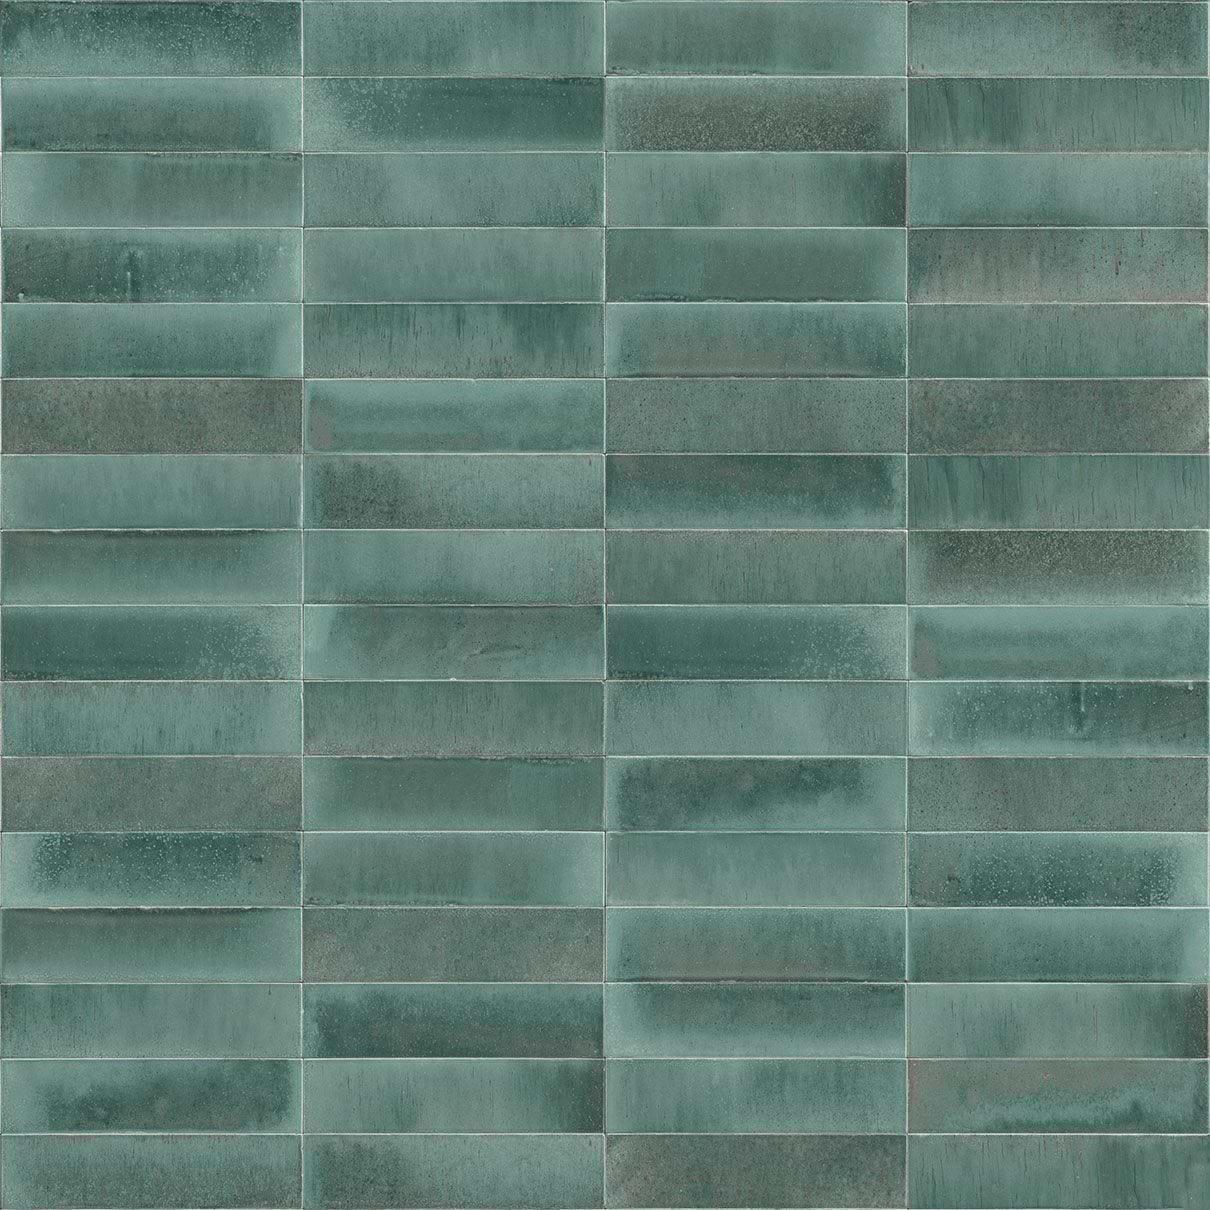 Minoli Wall & Floor Tiles 6 x 24 x 1cm Luminous Lume Turquoise